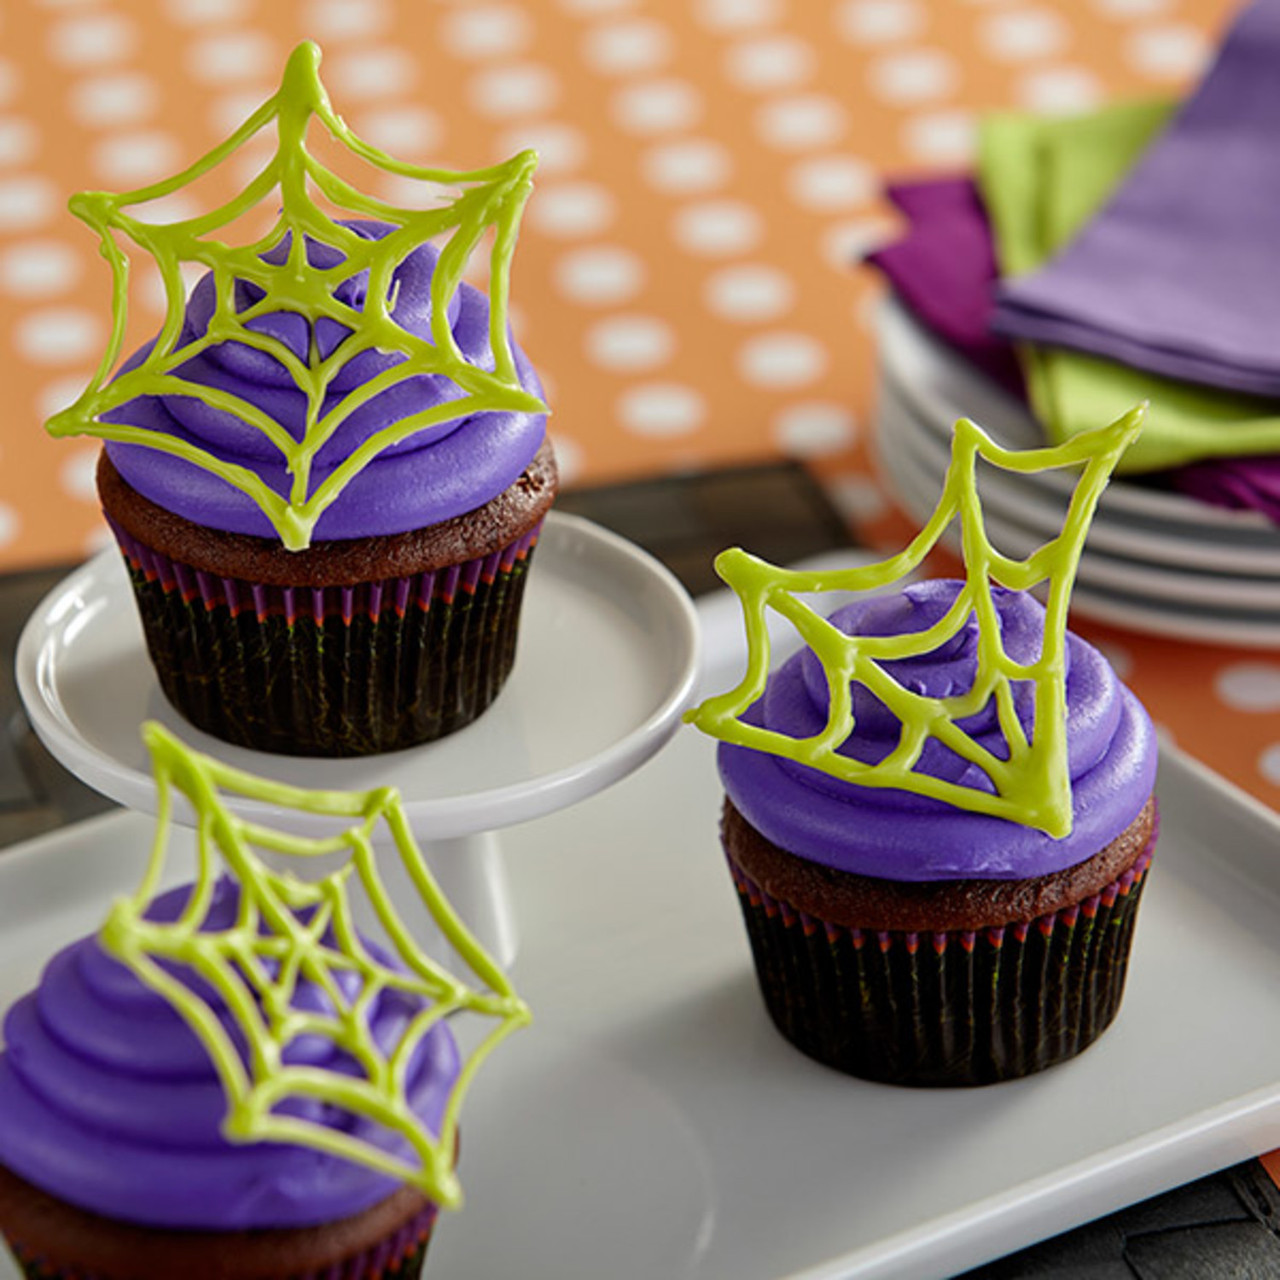 Buy M&M Spiderweb Chocolate Cupcake Kit - 11.68 OZ Spooky Themed